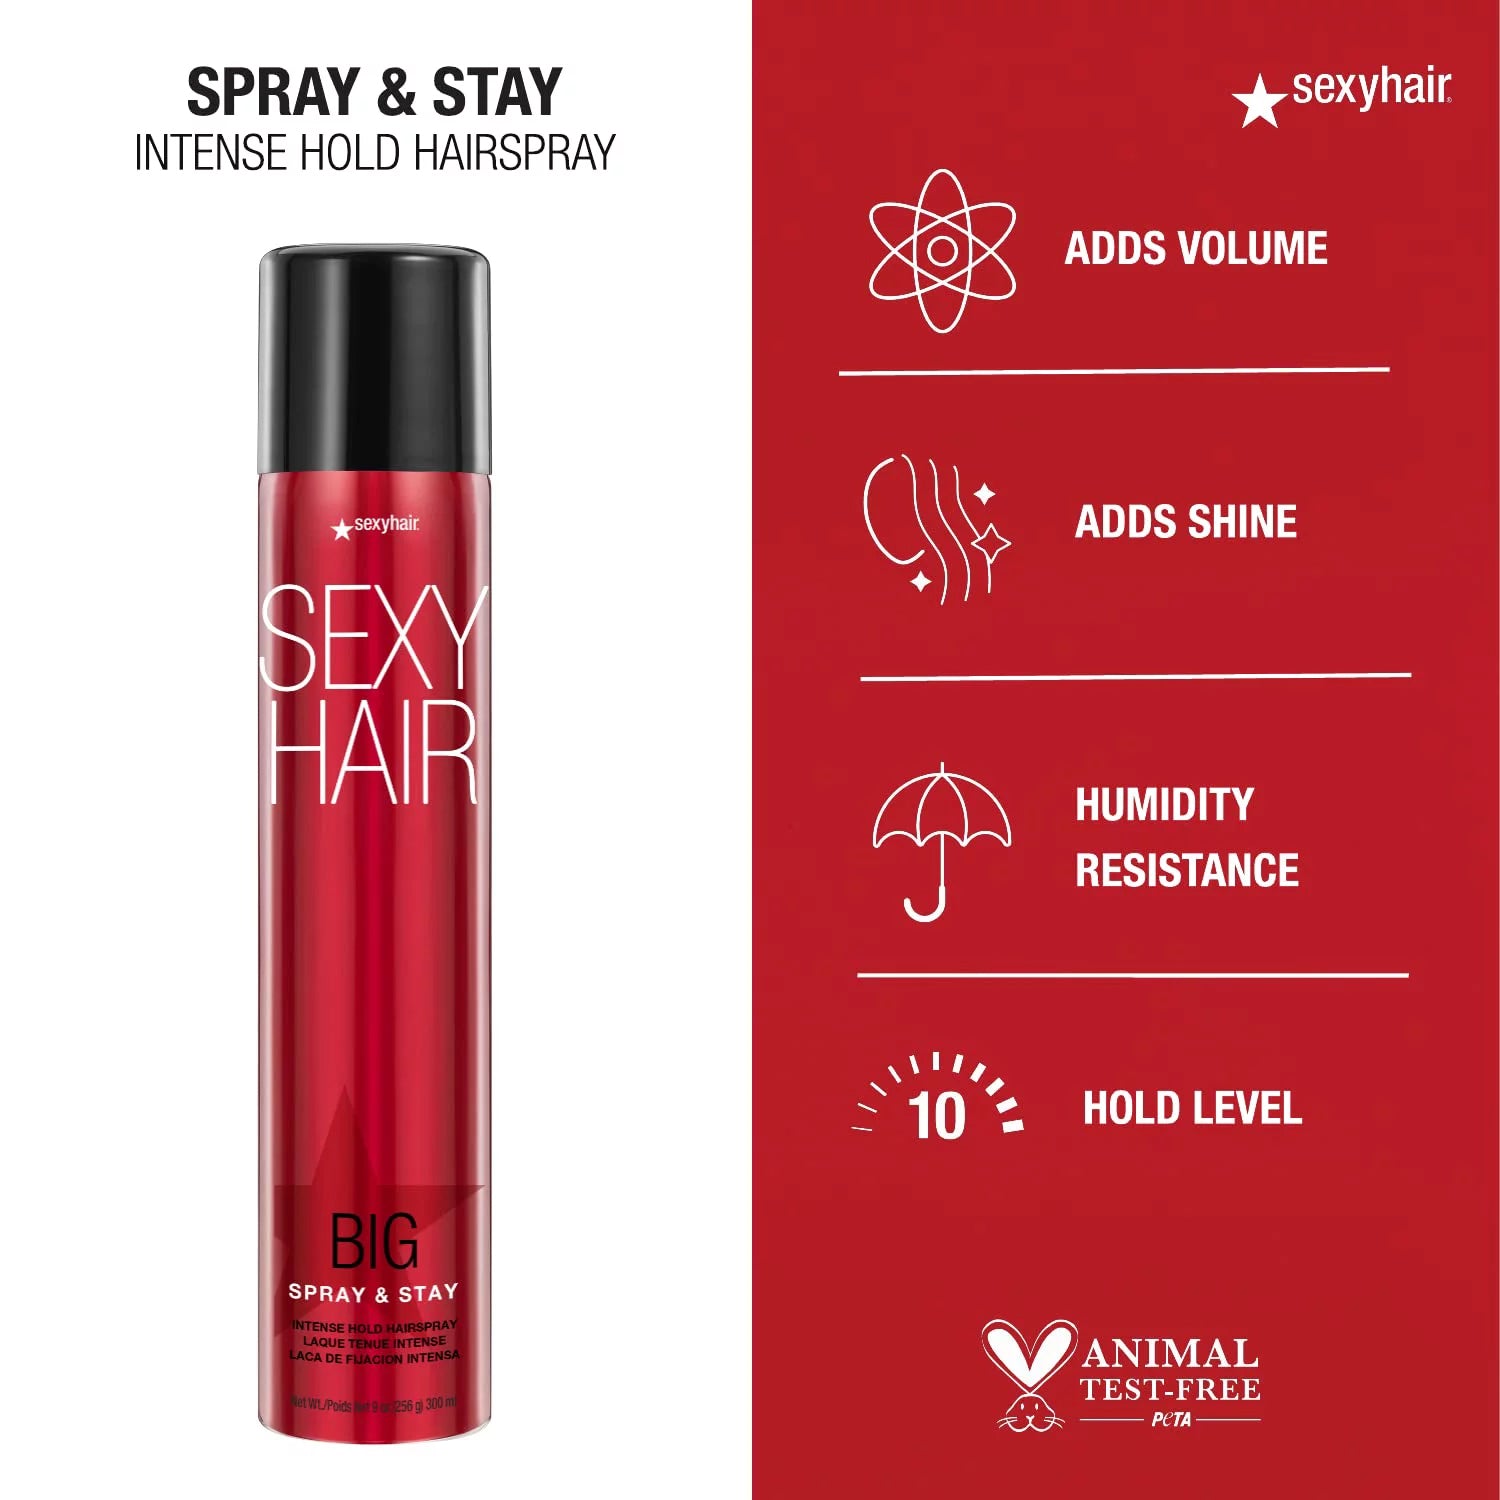 Big Sexy Hair Spray & Stay Intense Hold Hairspray Benefits